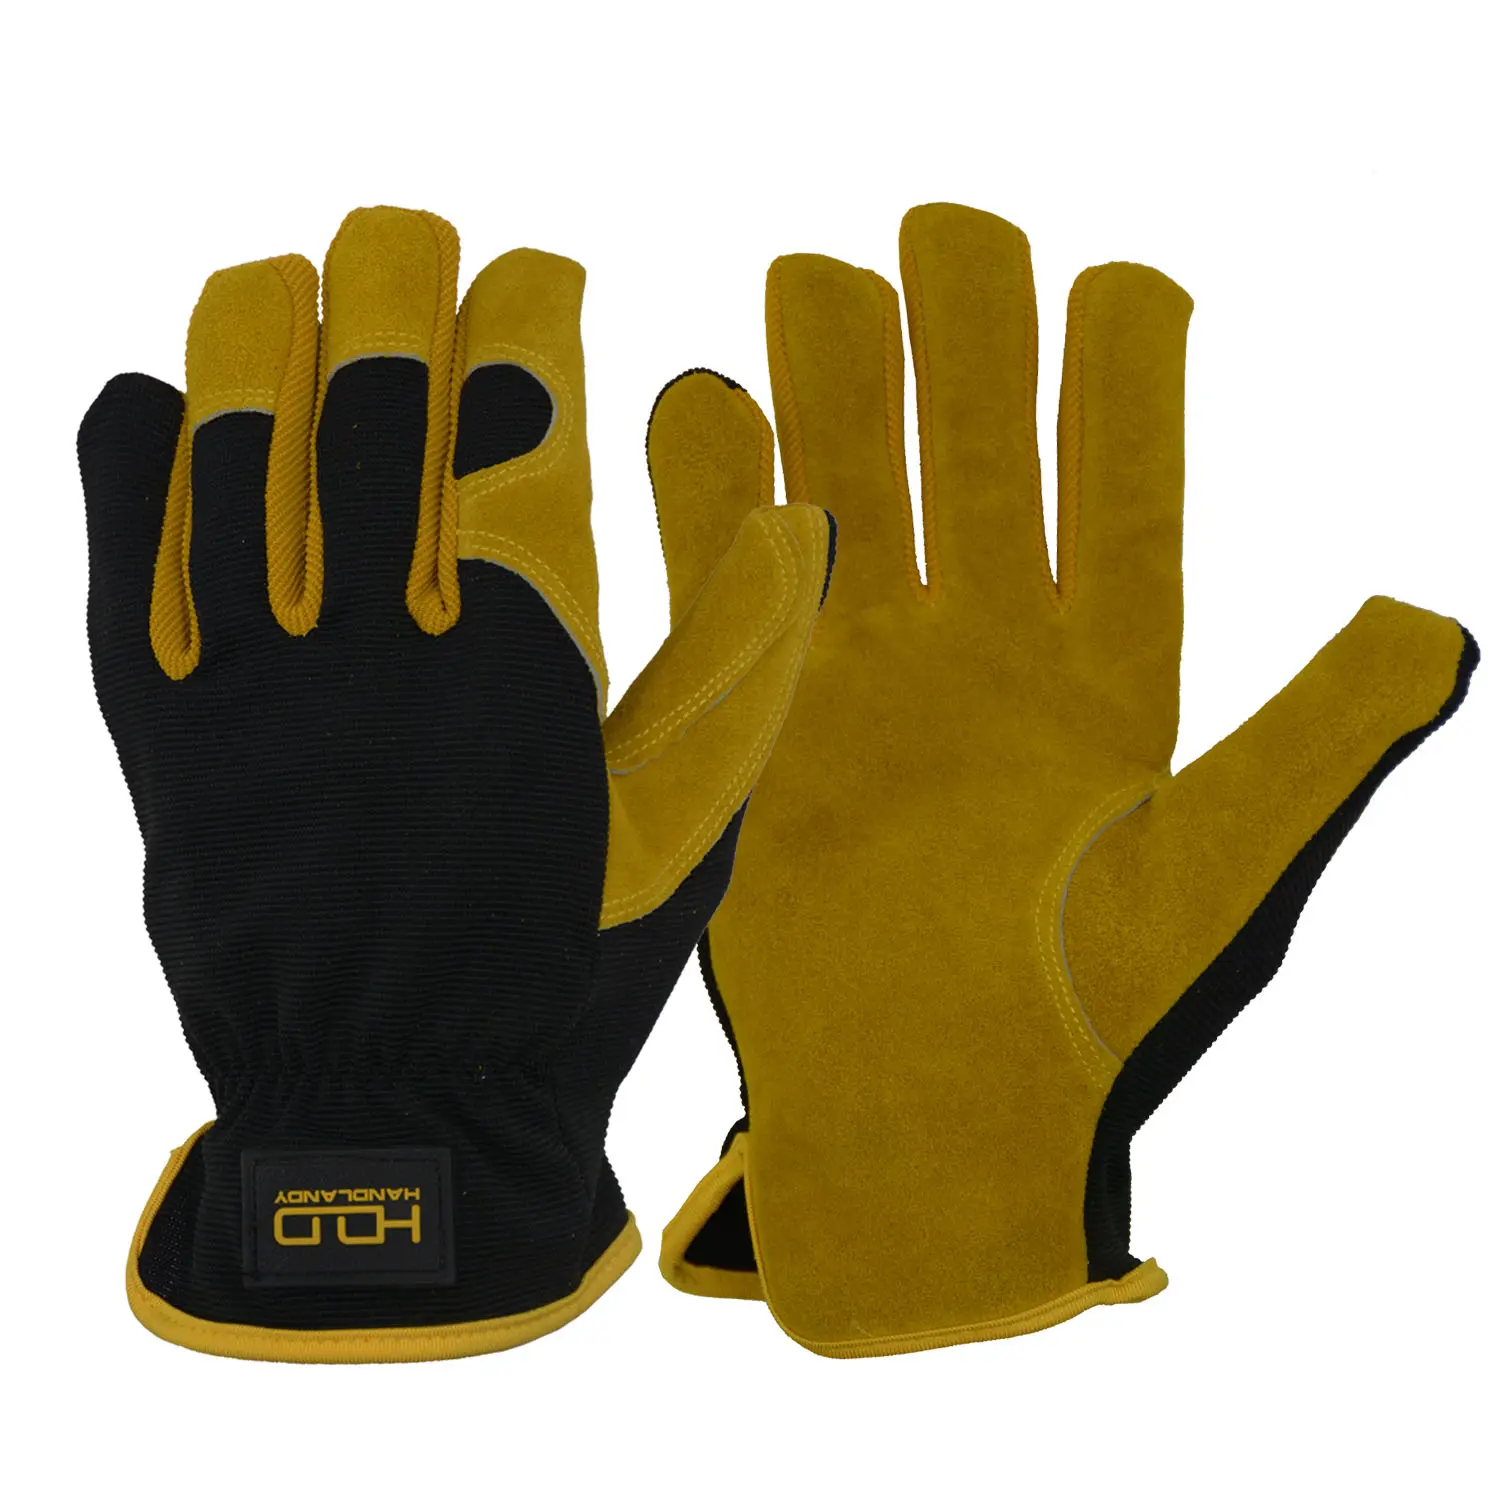 Safety Driving Gloves HANDLANDY Cowhide Leather Work Safety Hand Leather Driving Leather Working Gloves For Mens